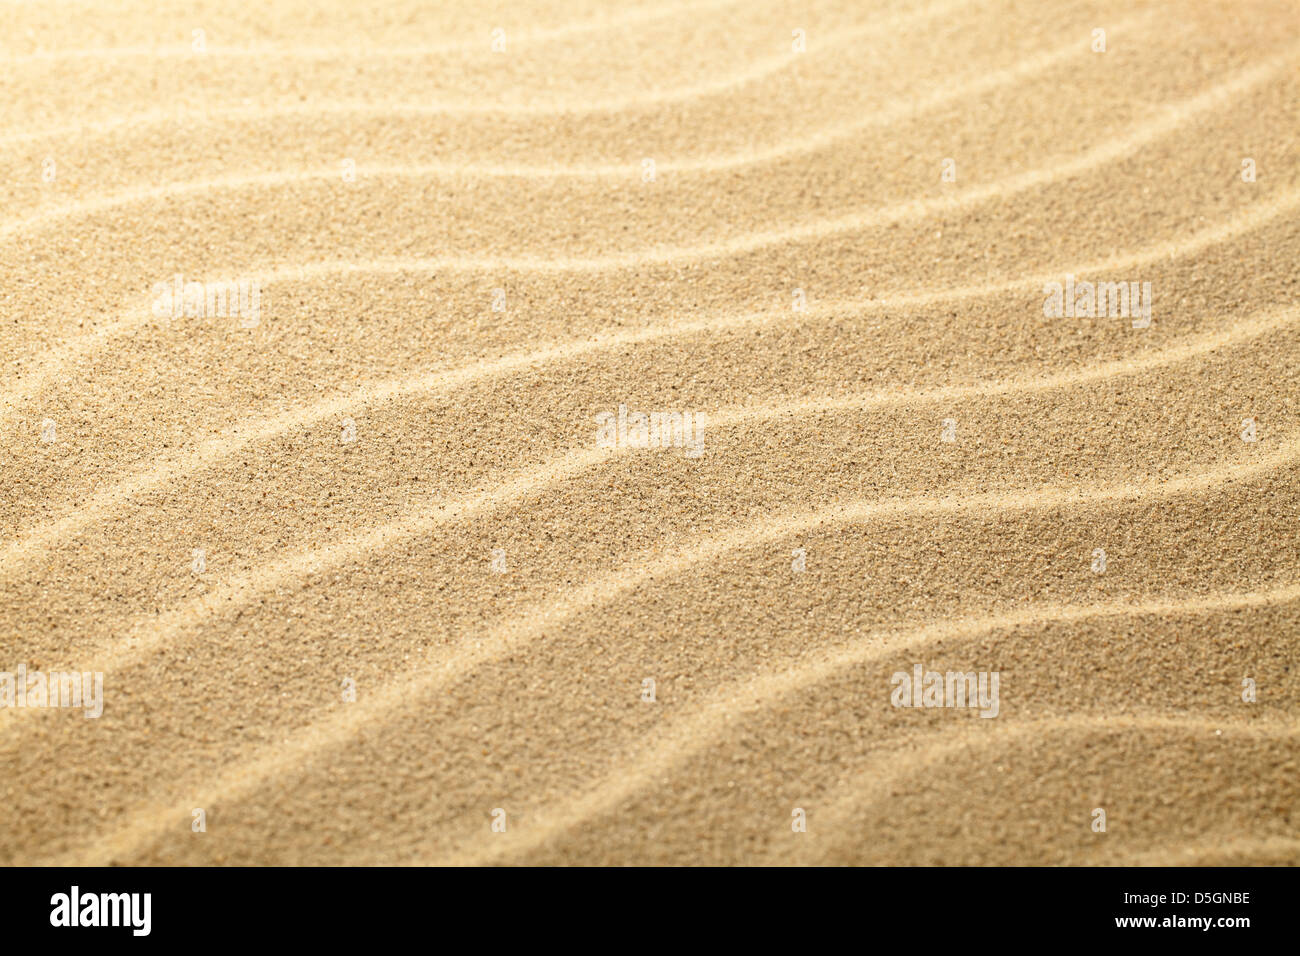 Sand summer background. Sandy beach texture. Copy space Stock Photo